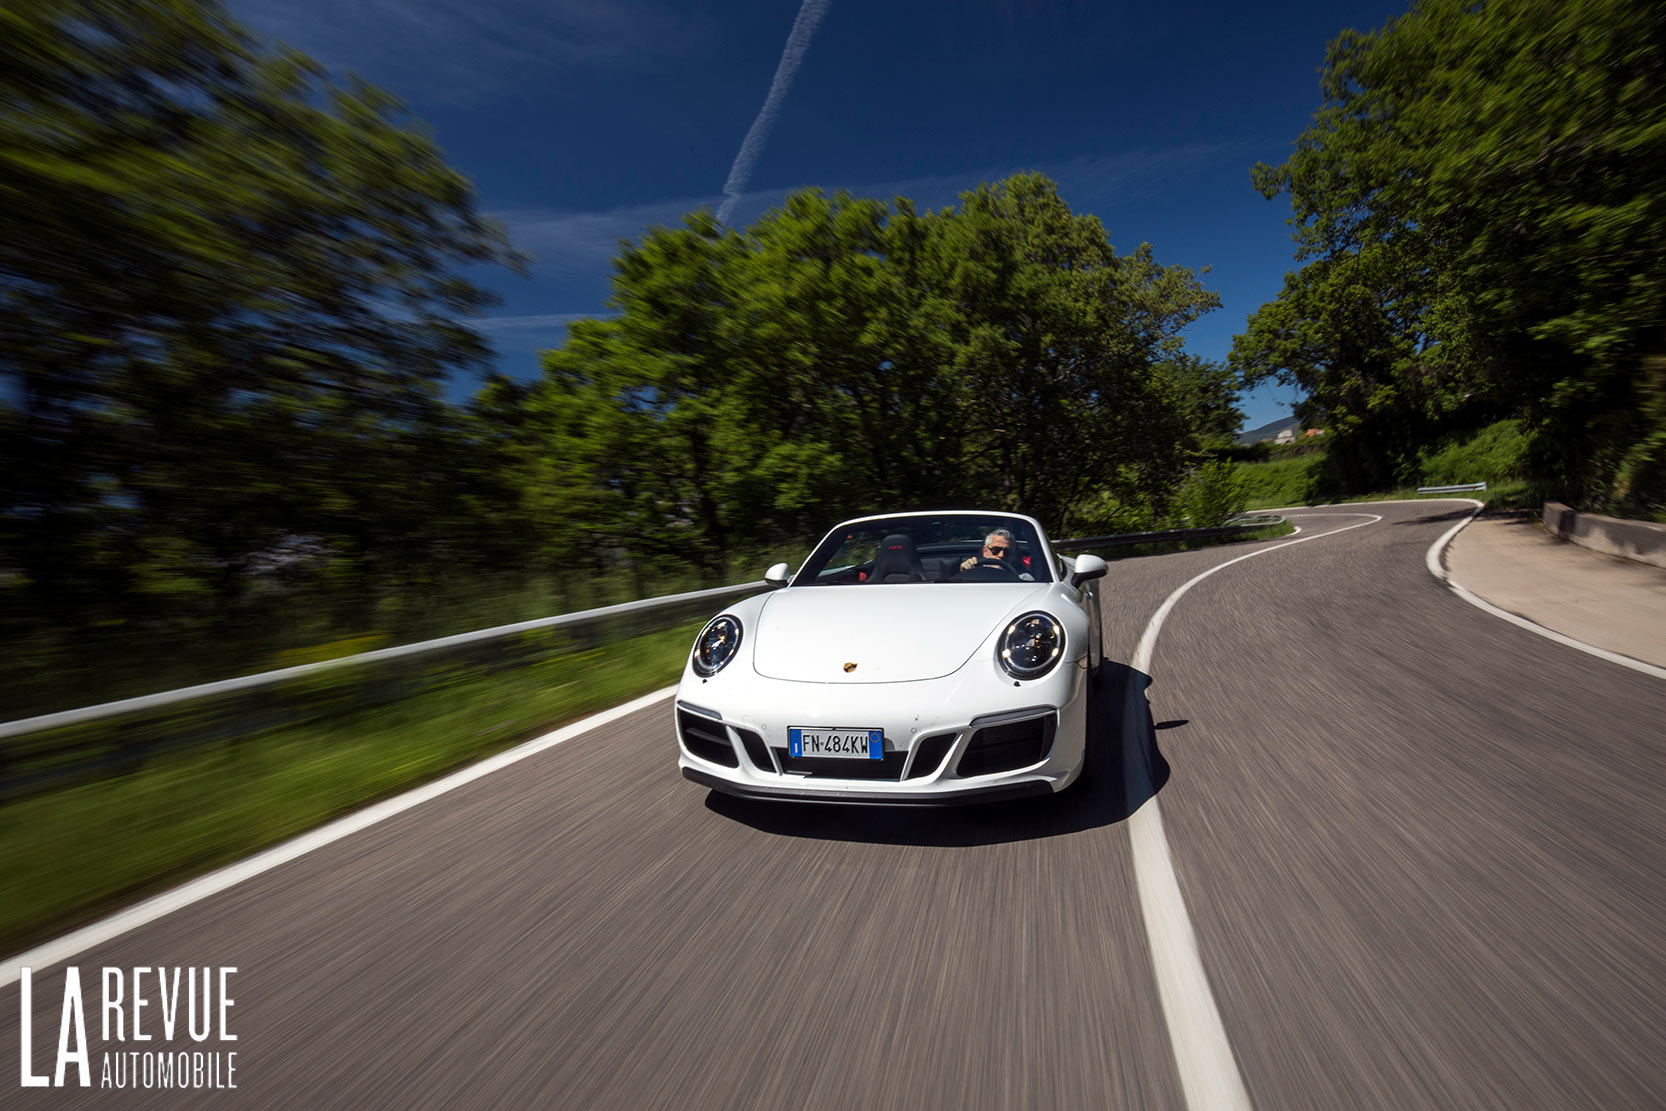 Image principale de l'actu: Essai Porsche 911 carrera 4 GTS cabriolet : allégorie de la polyvalence